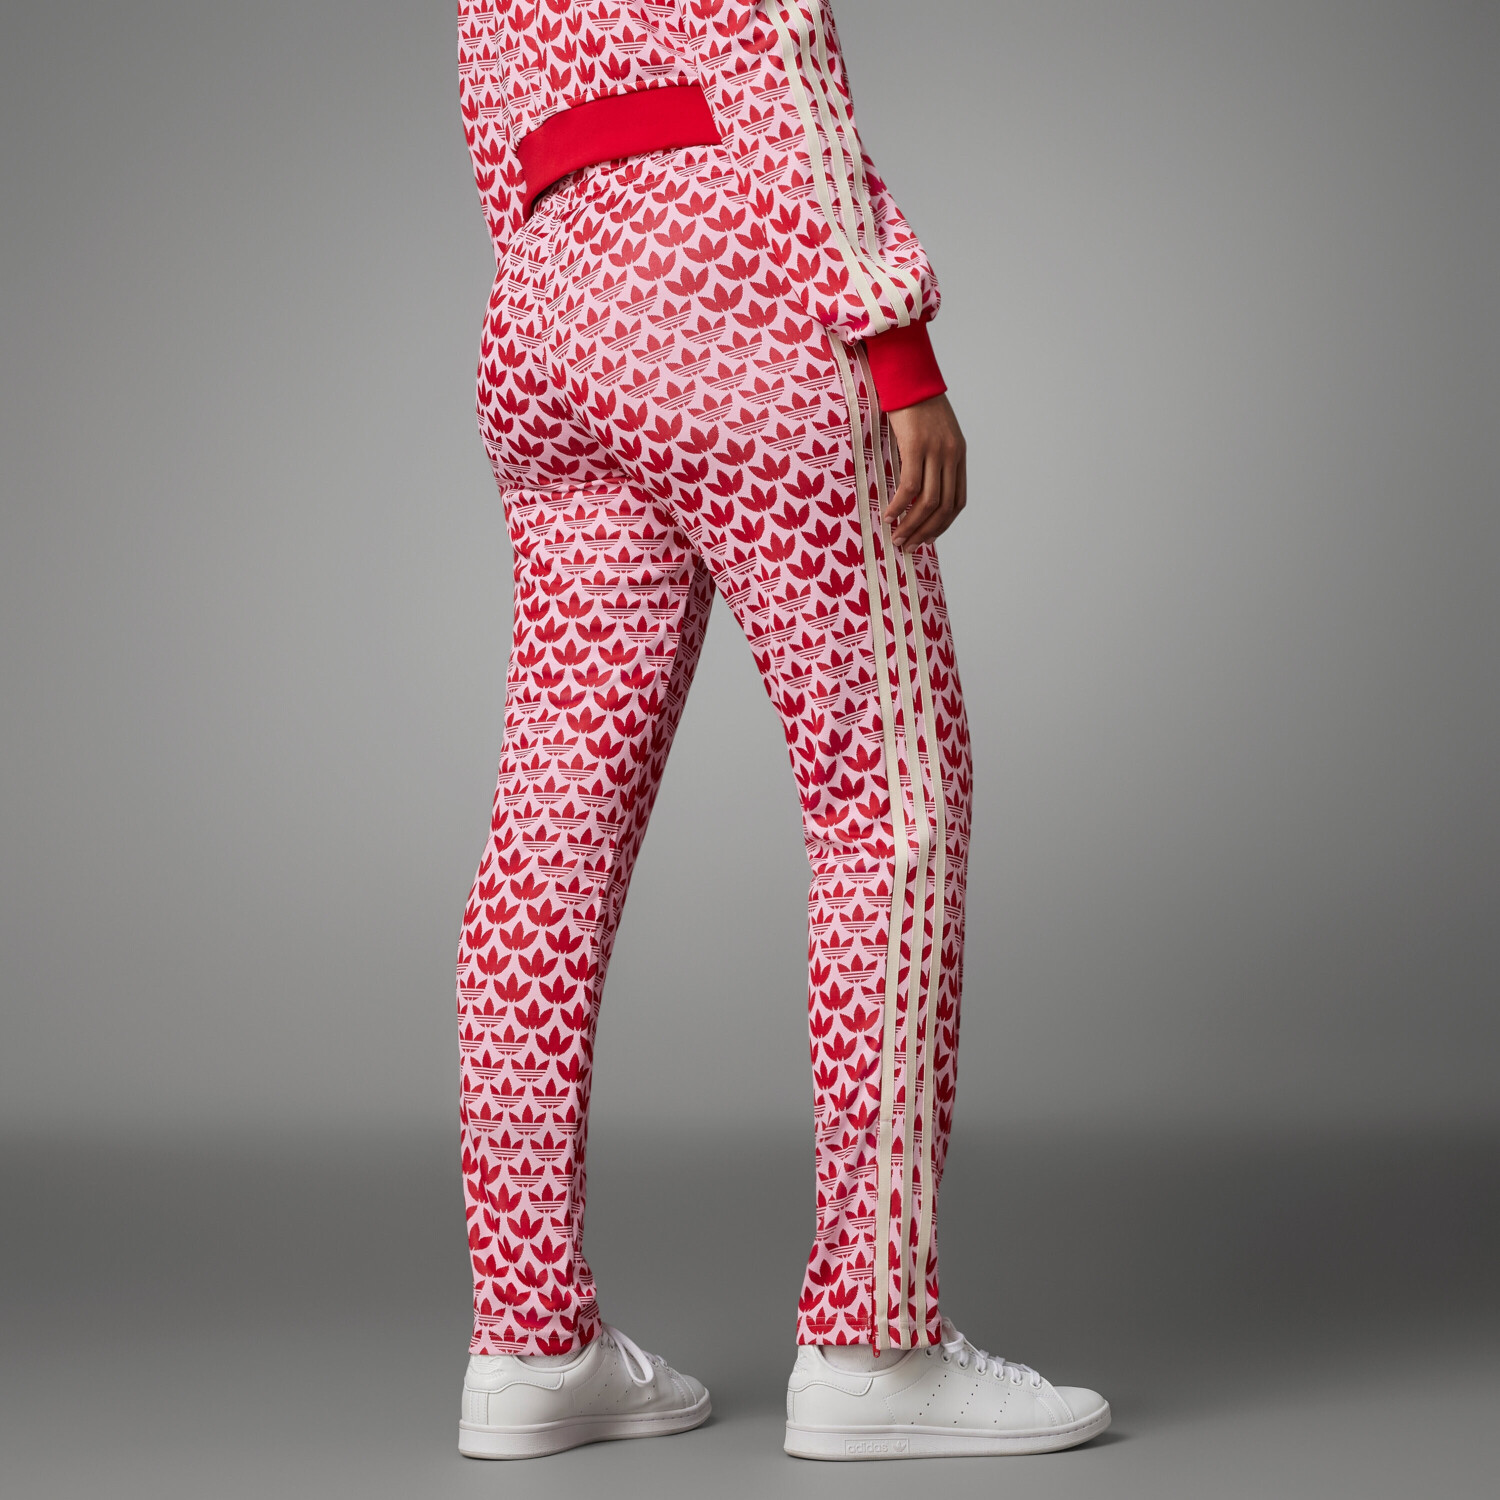 Adidas Woman adicolor 70s SST 72,00 Preisvergleich bei € Training | ab pink true Pants (IK7874)